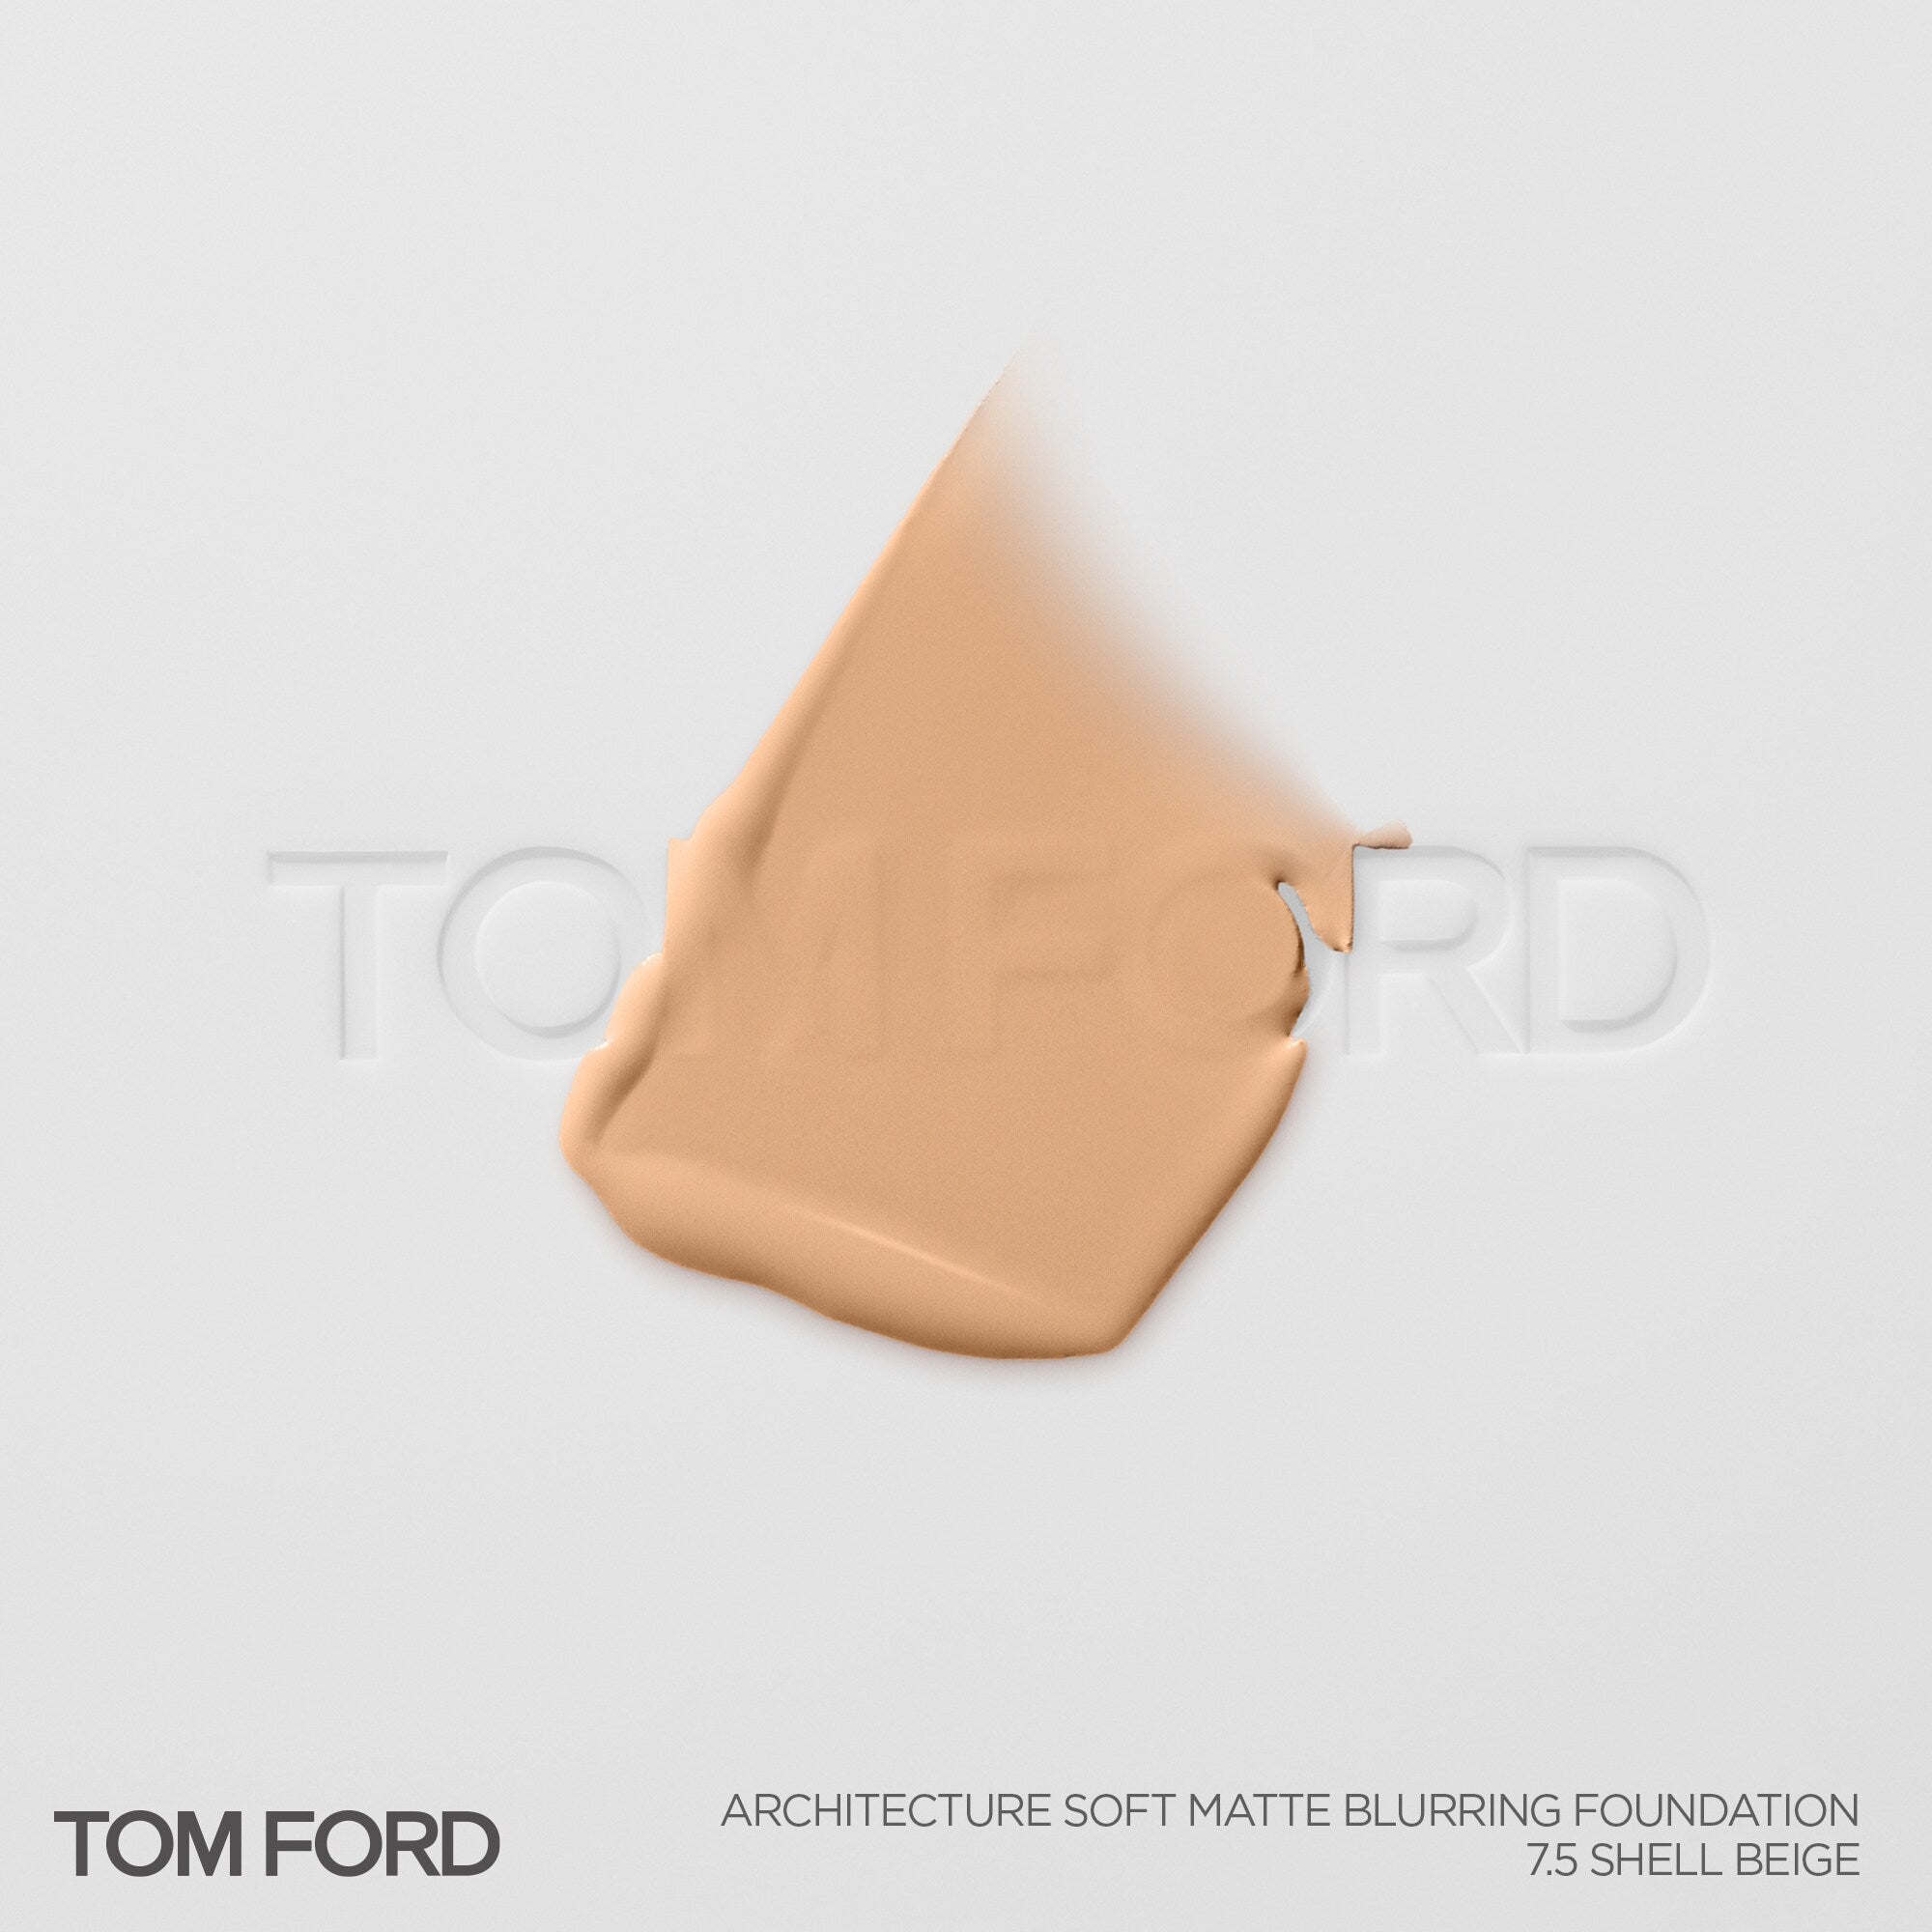 Kem Nền TOM FORD Architecture Soft Matte Foundation #7.5 Shell Beige